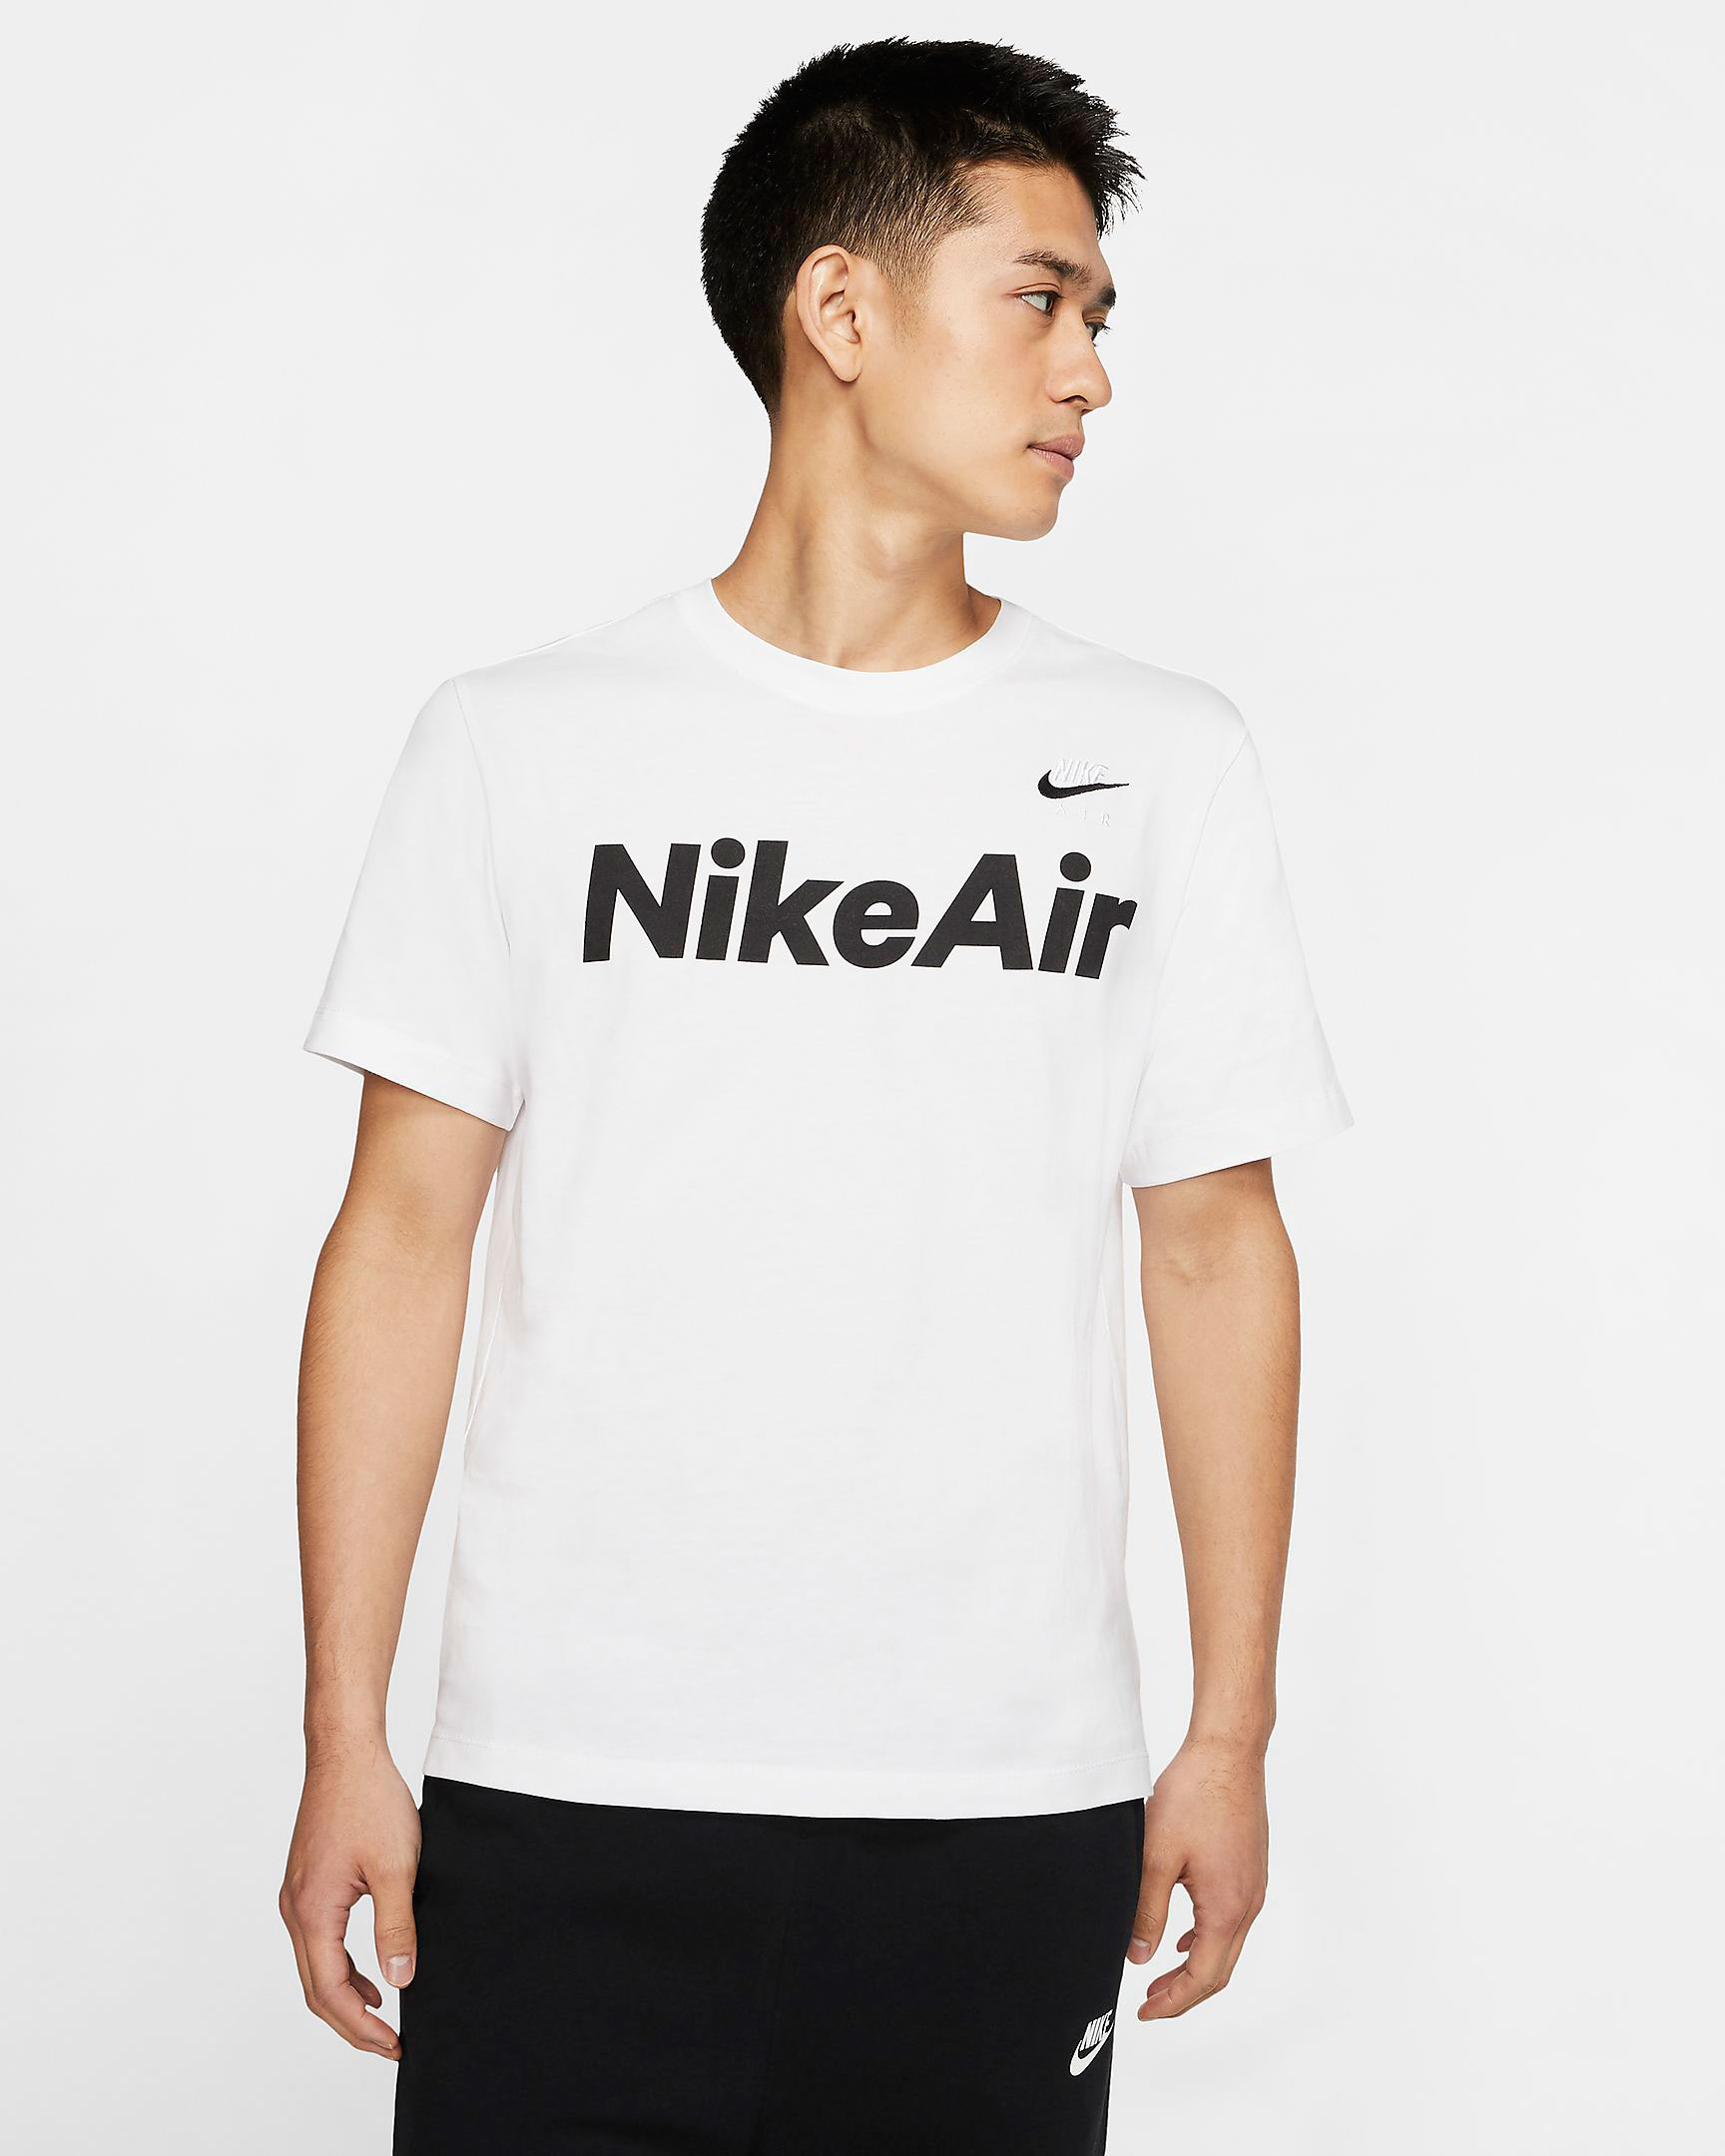 nike-air-shirt-white-black